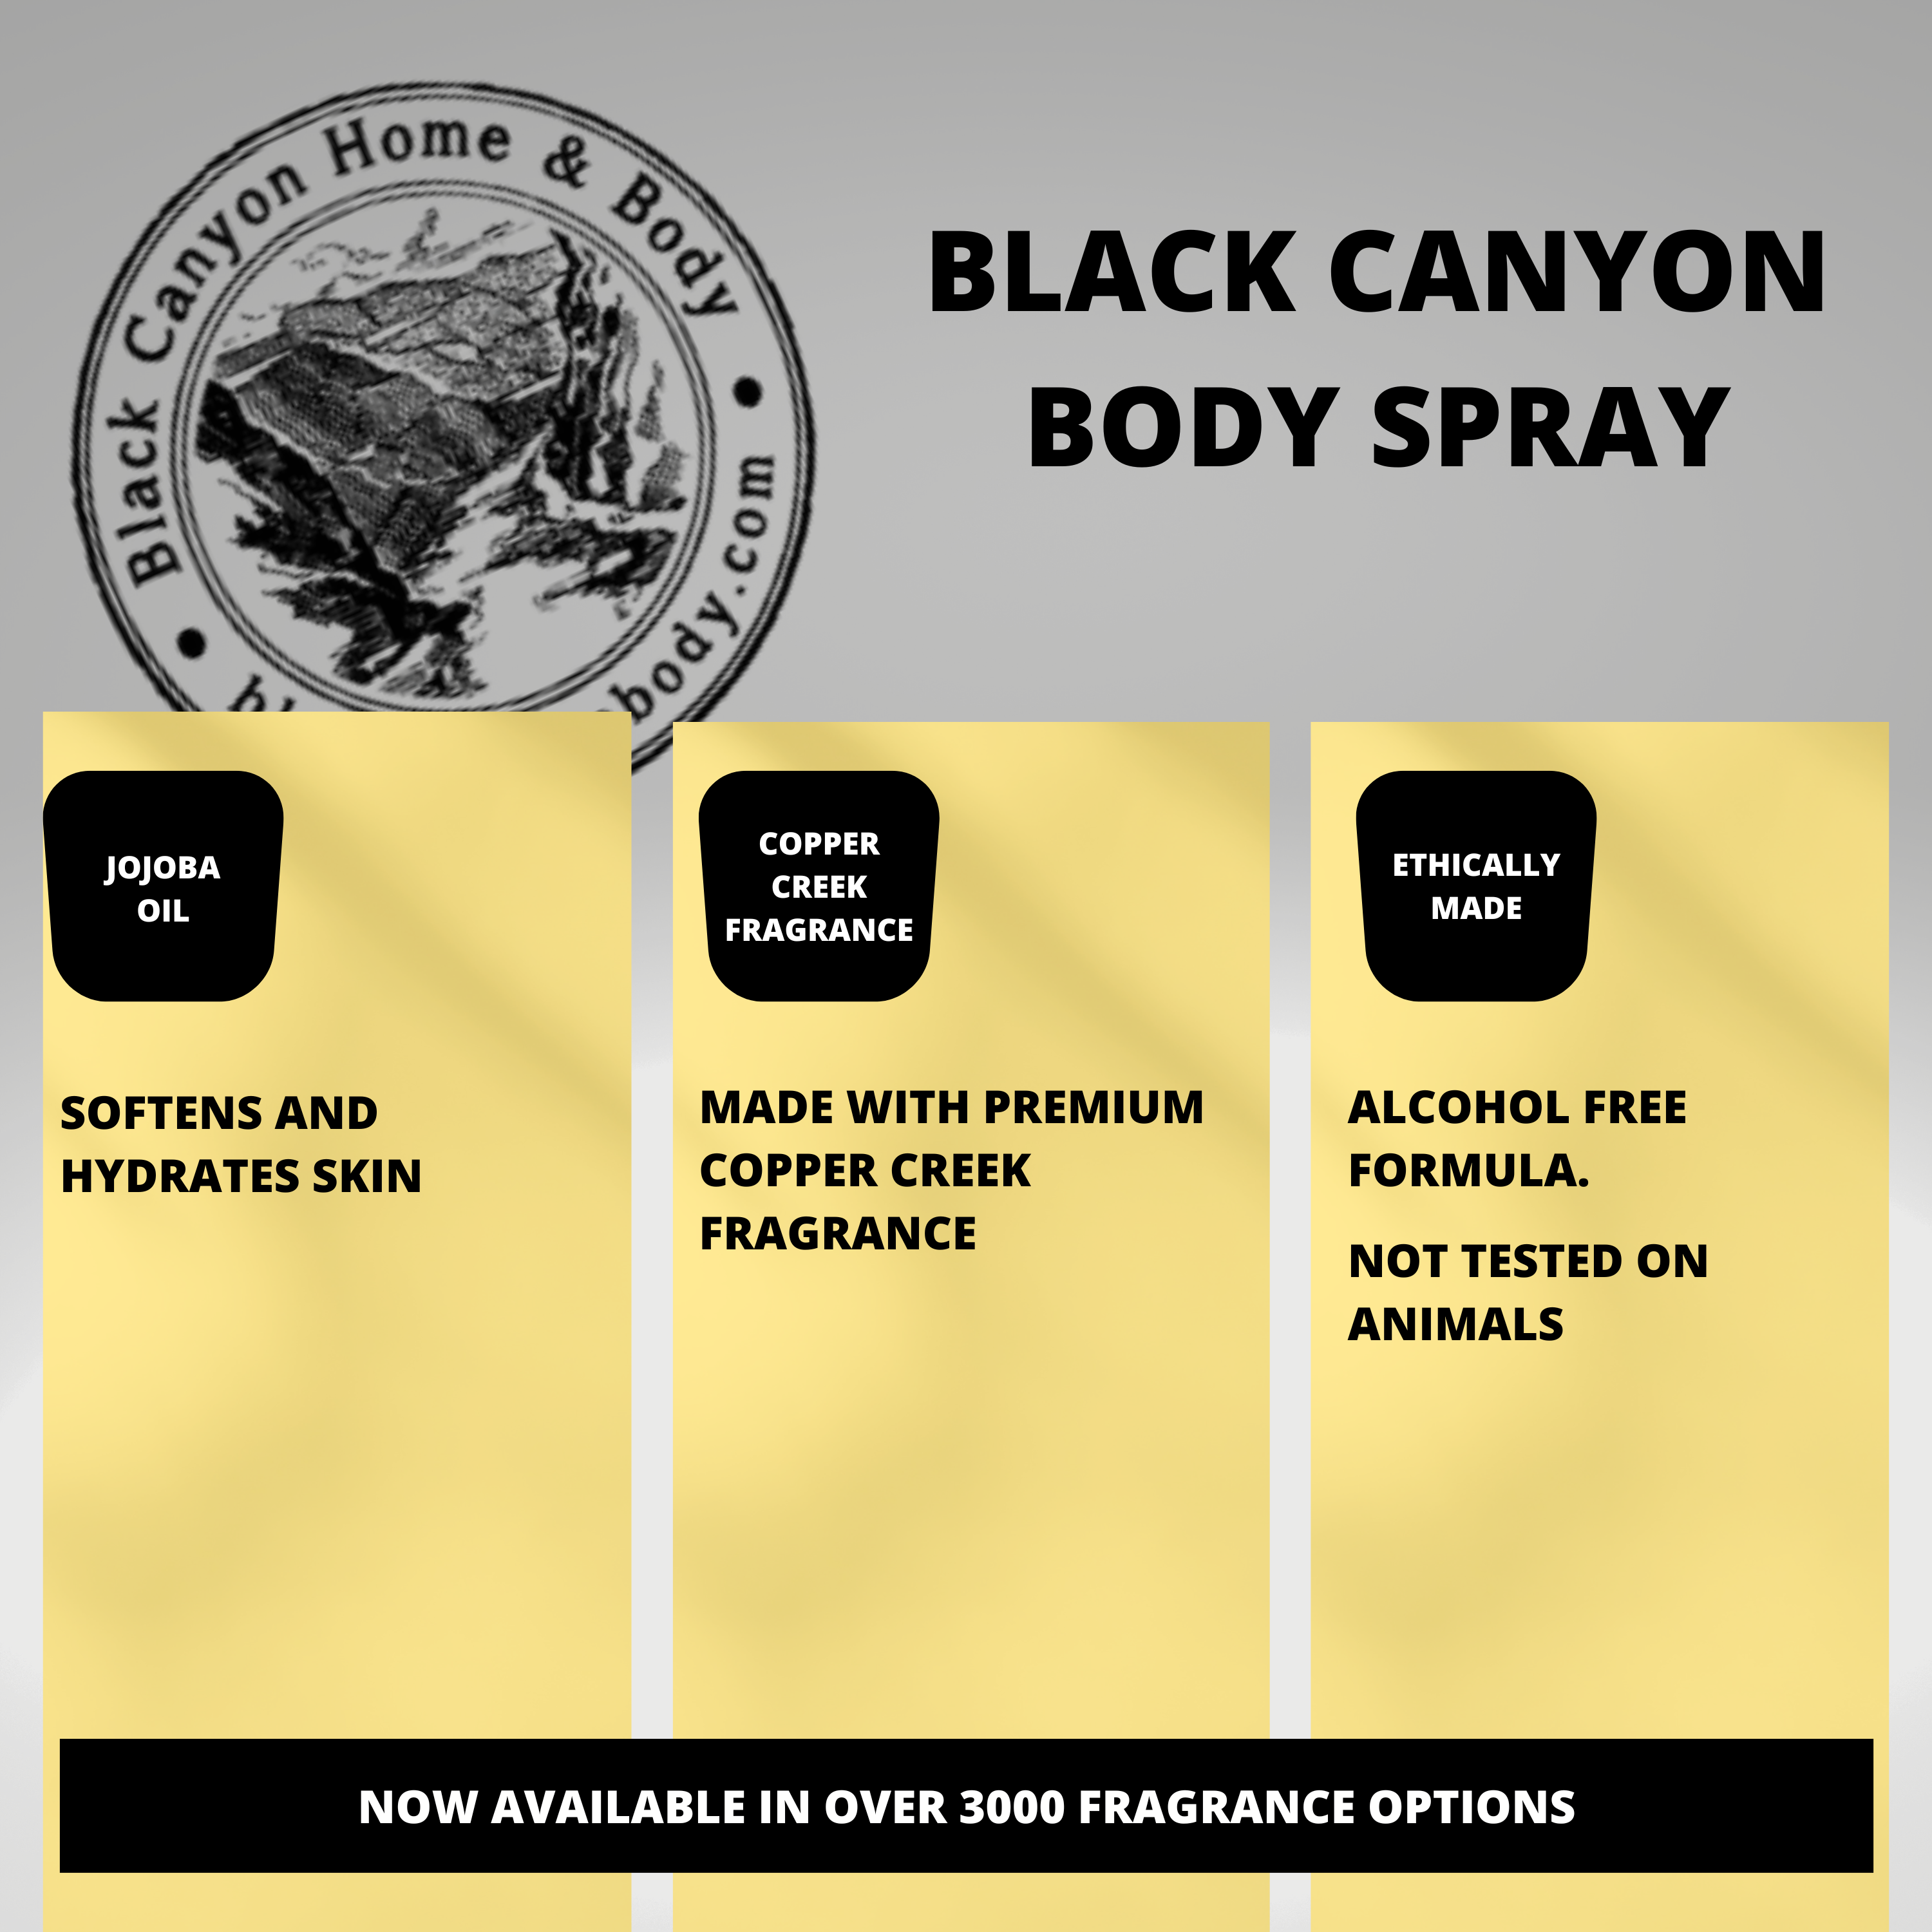 Black Canyon Bartlett Pear & Brandy Scented Body Spray